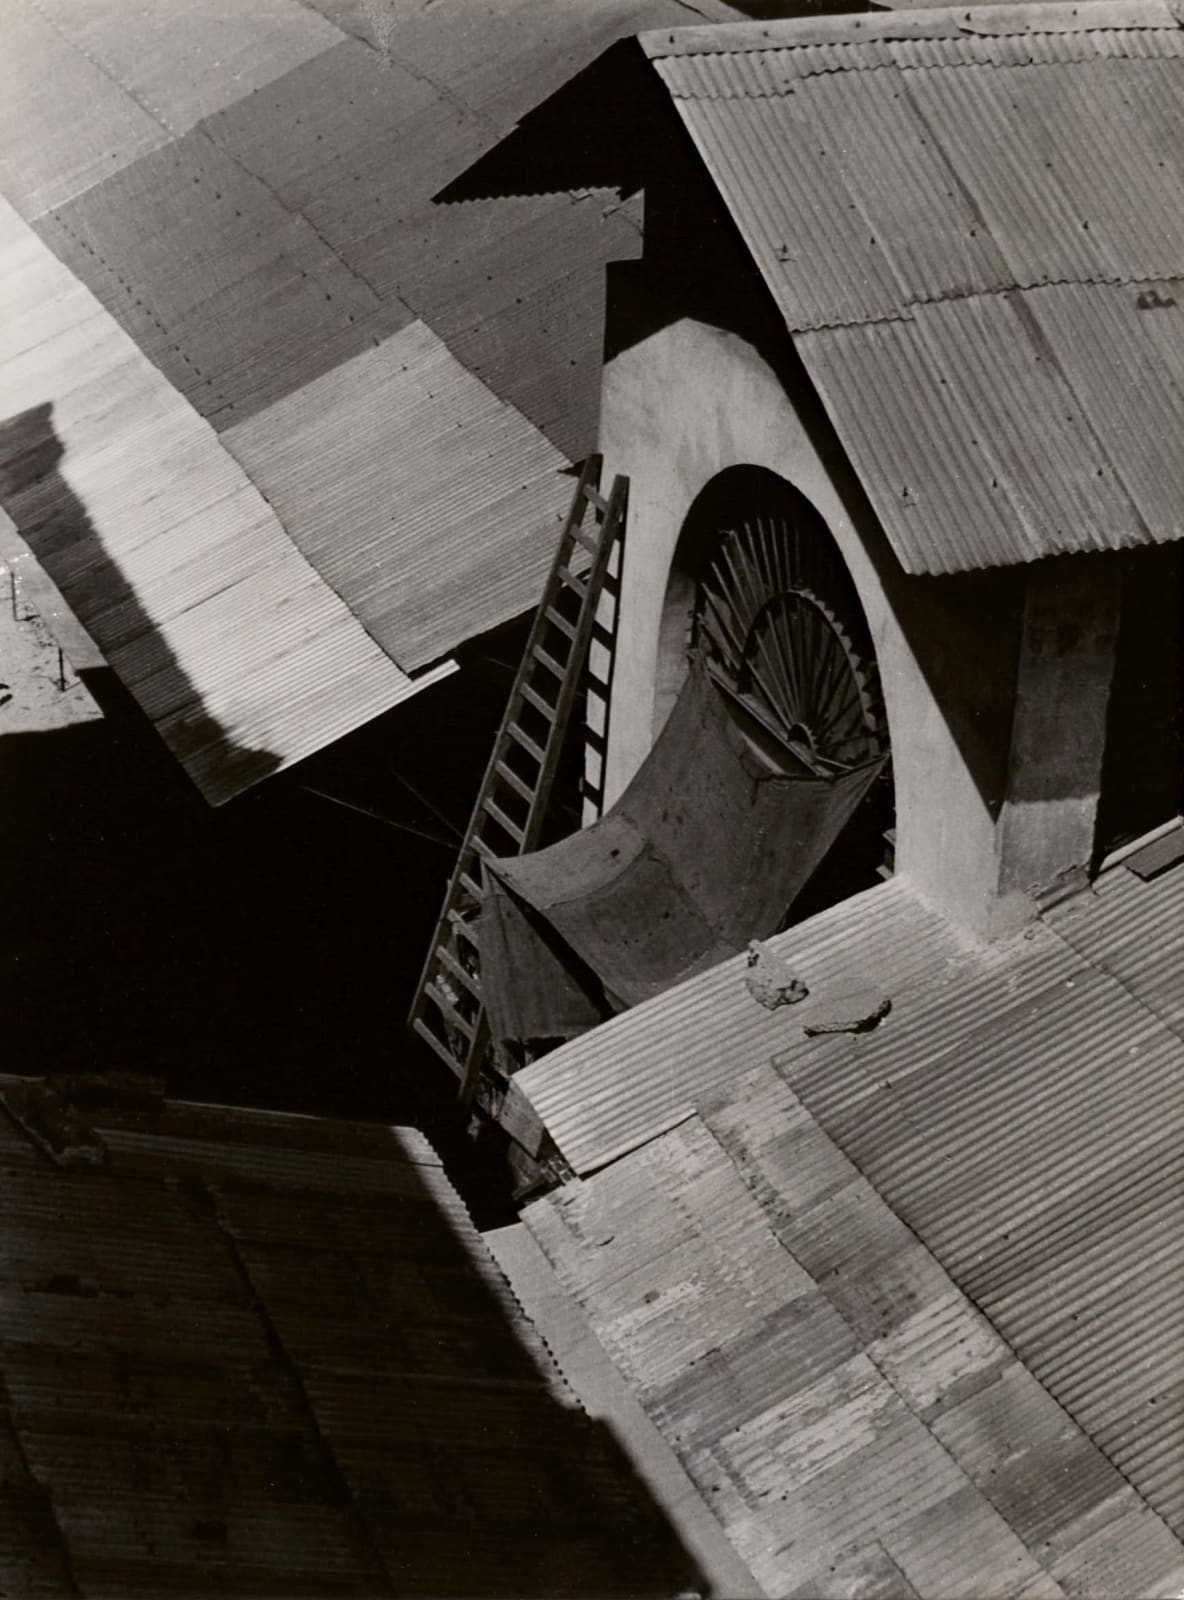 Brett Weston, Market Place (La Merced Market, Mexico City), 1925